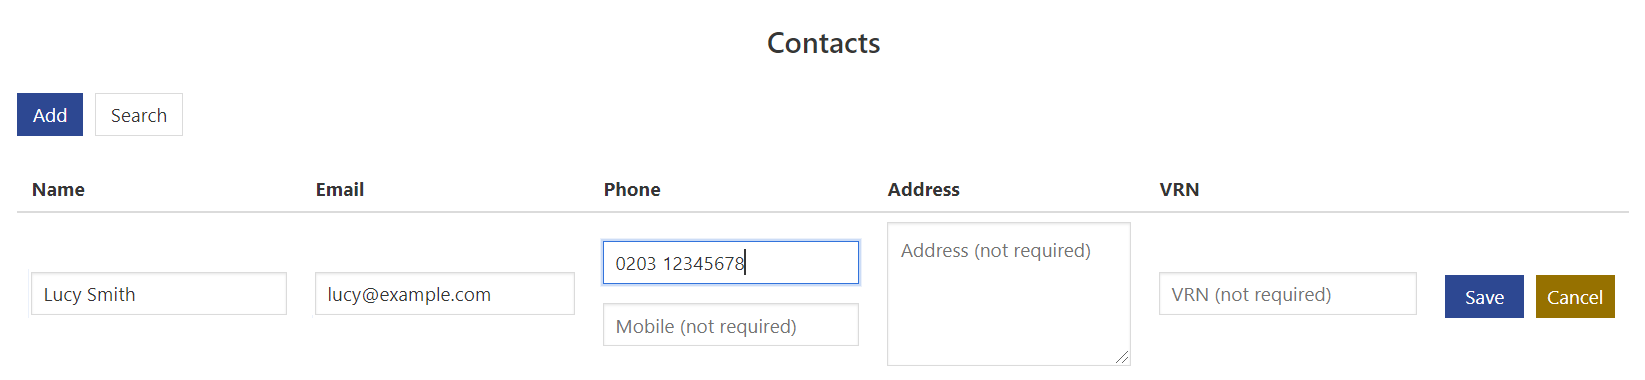 My Tax Digital adding a contact